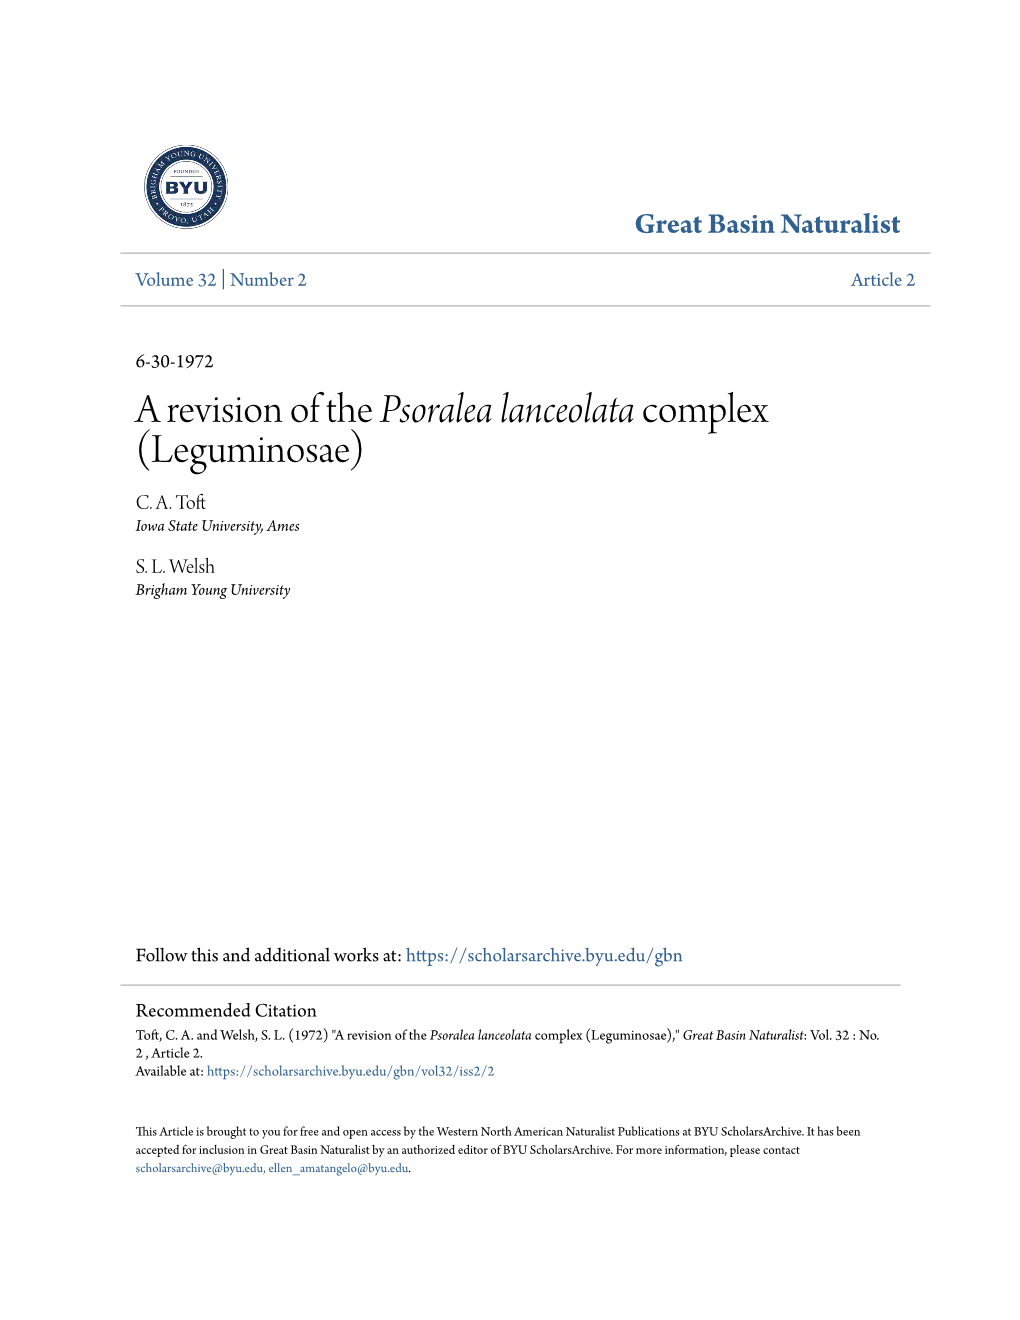 A Revision of the Psoralea Lanceolata Complex (Leguminosae) C